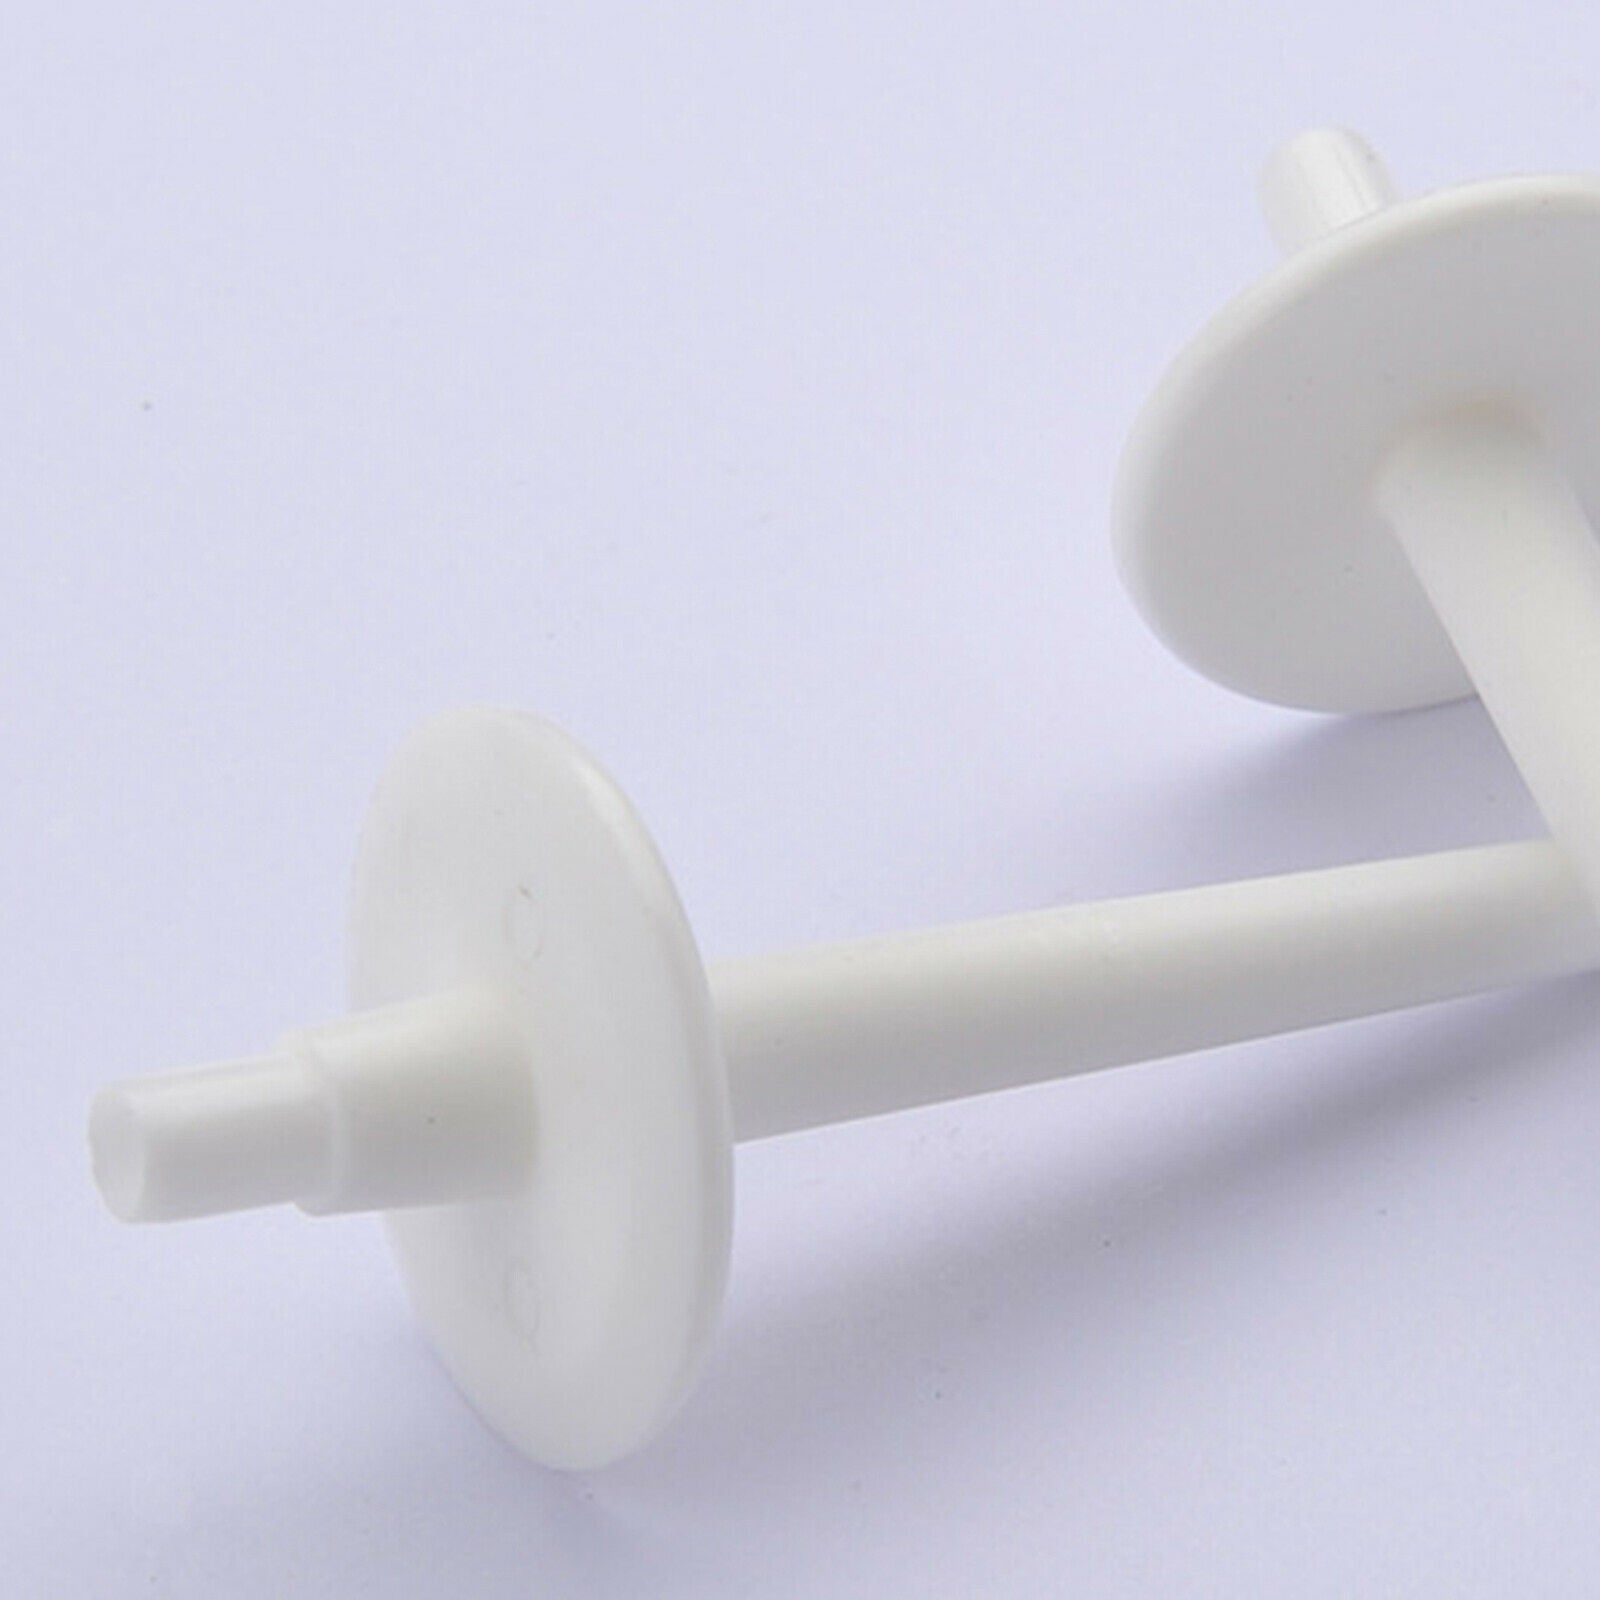 10 Pieces Sewing Machine Spool Pins Stand Bobbin Winder Bobbins Accessories